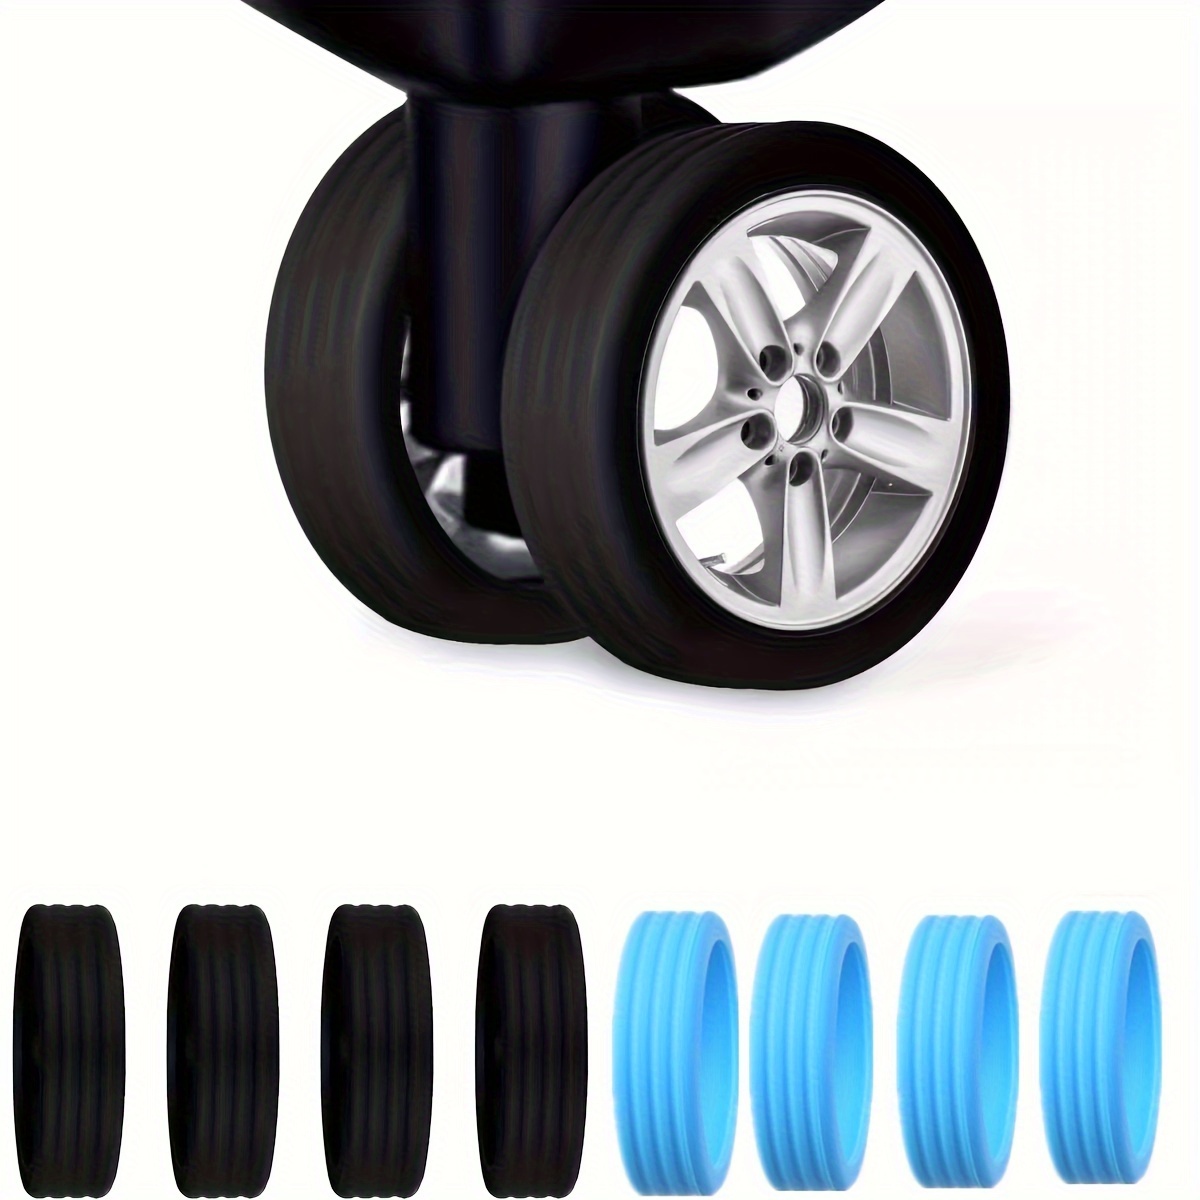  uinhuine 9Pack Luggage Suitcase Wheels Cover Carry on Luggage  Wheels Cover for most 8-spinner Wheels Luggage Sets